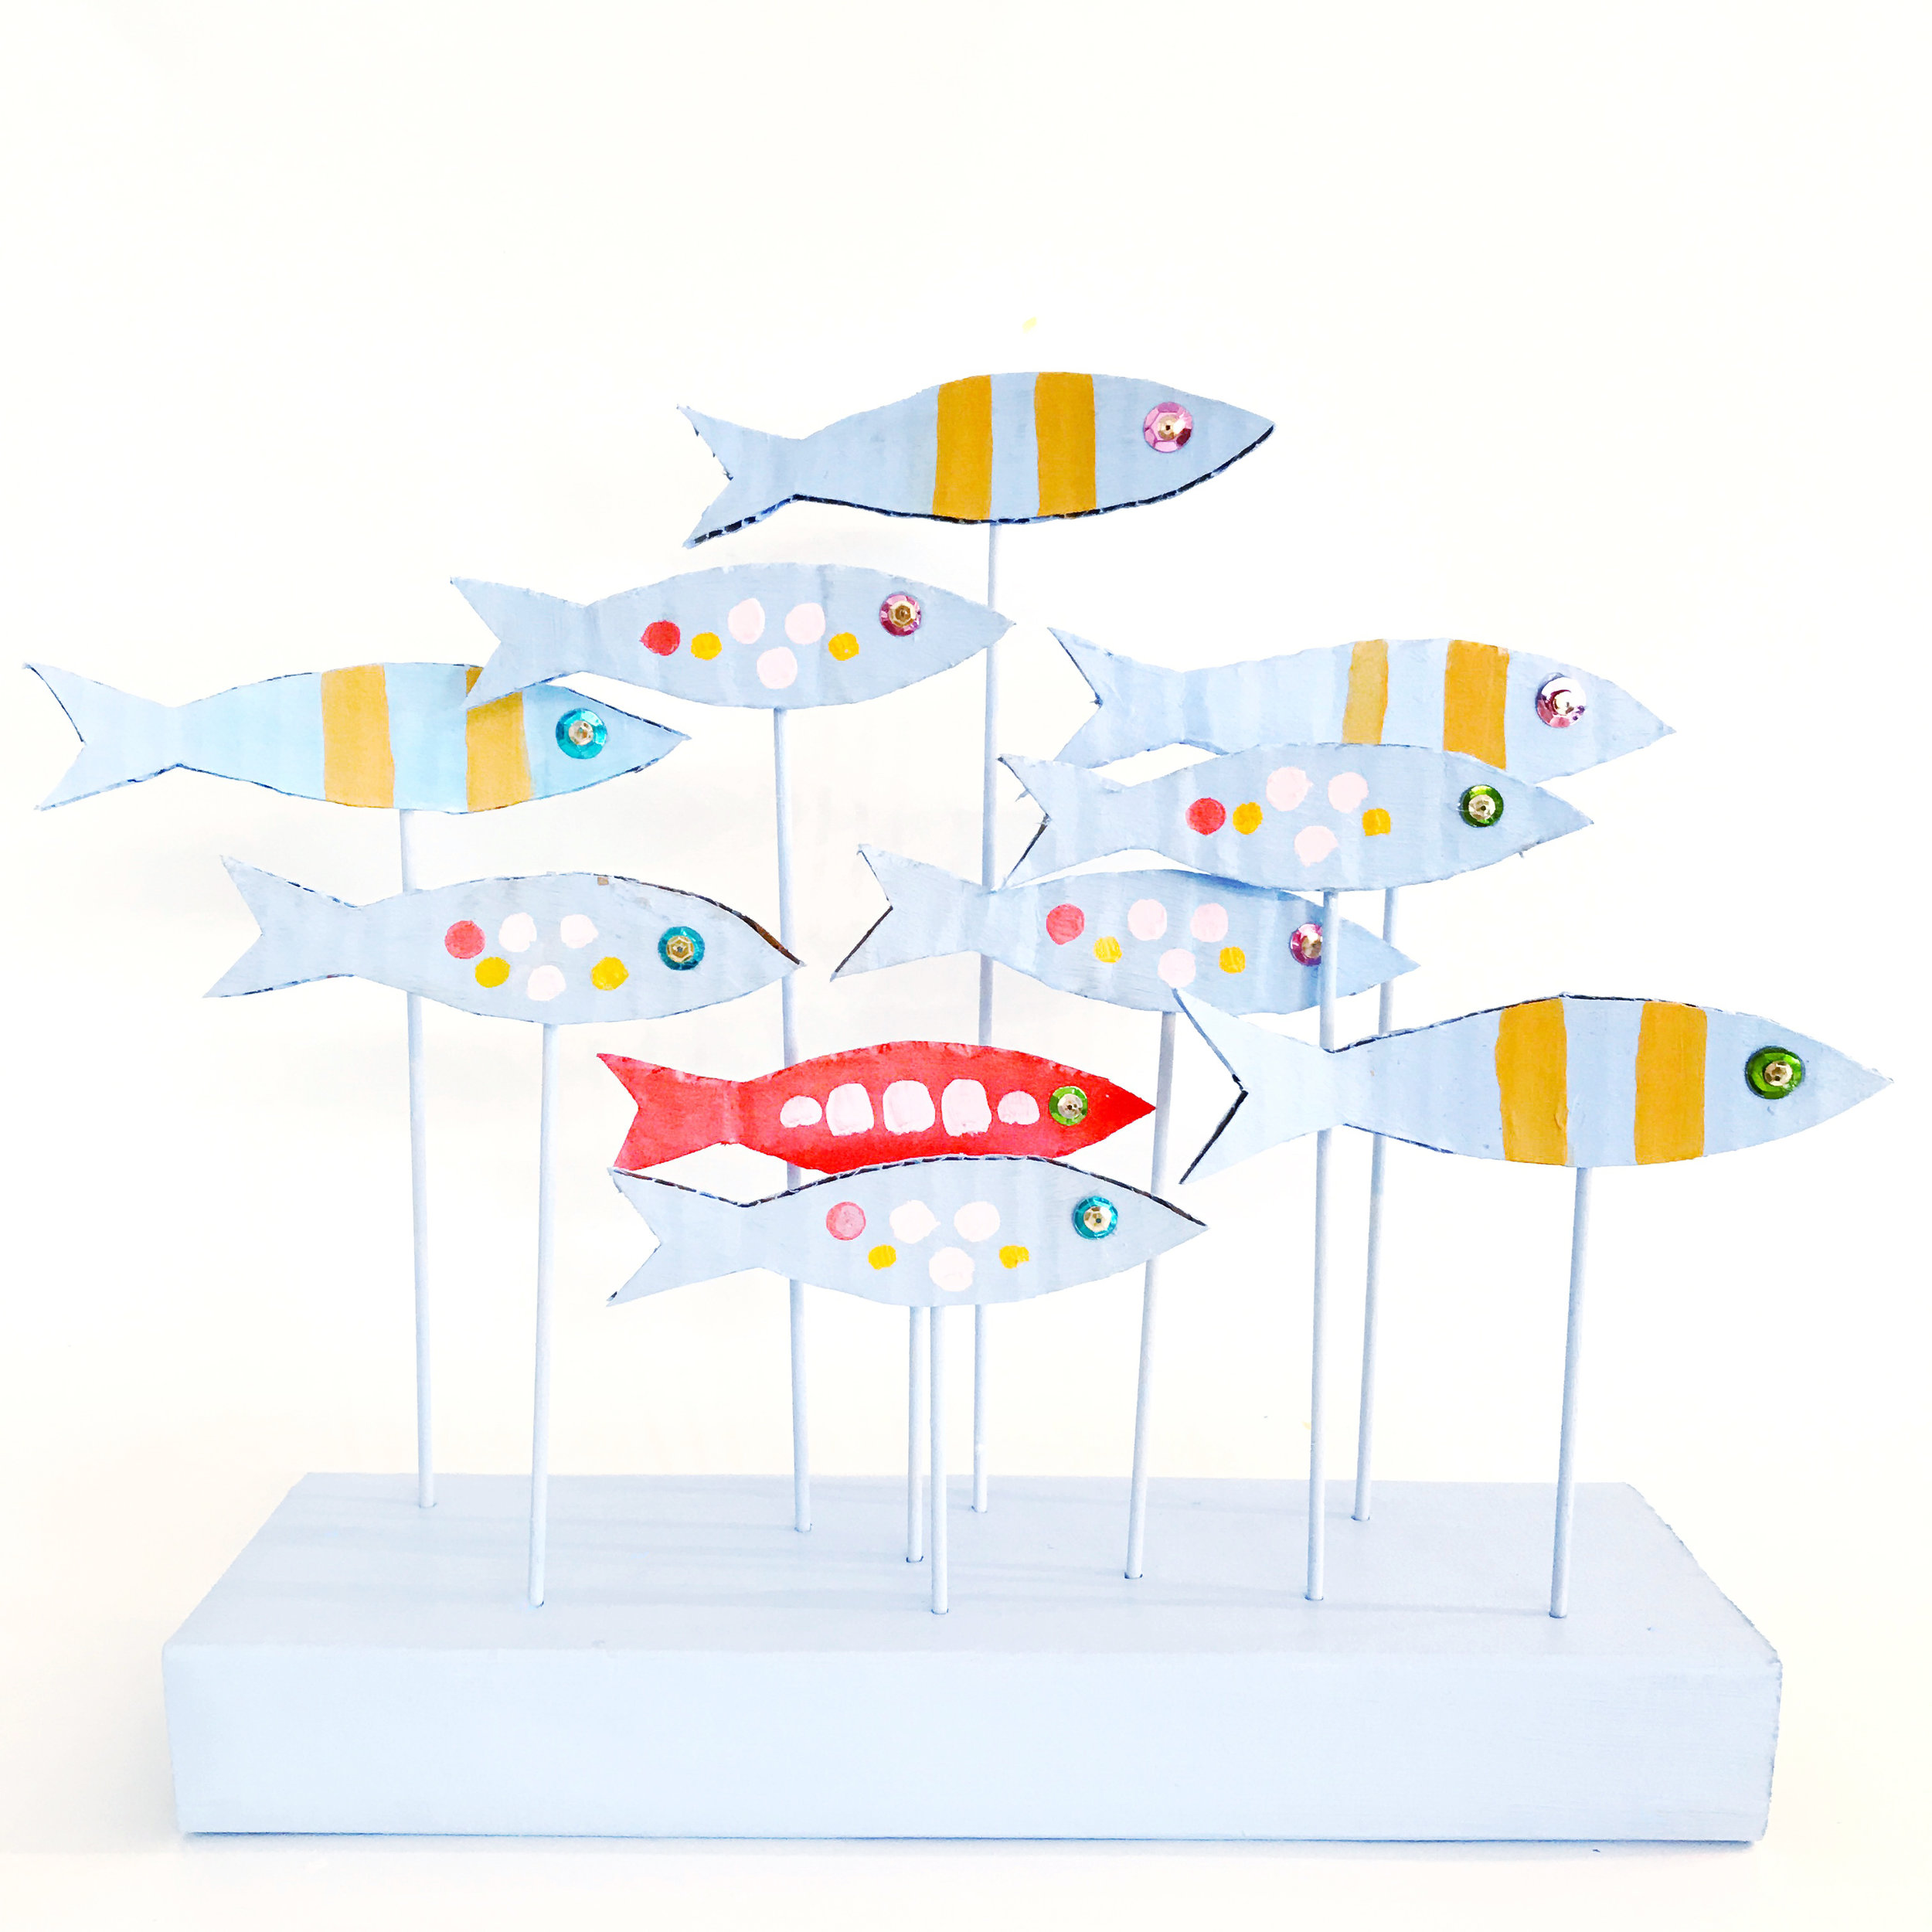 School of Fish Sculpture — ART CAMP